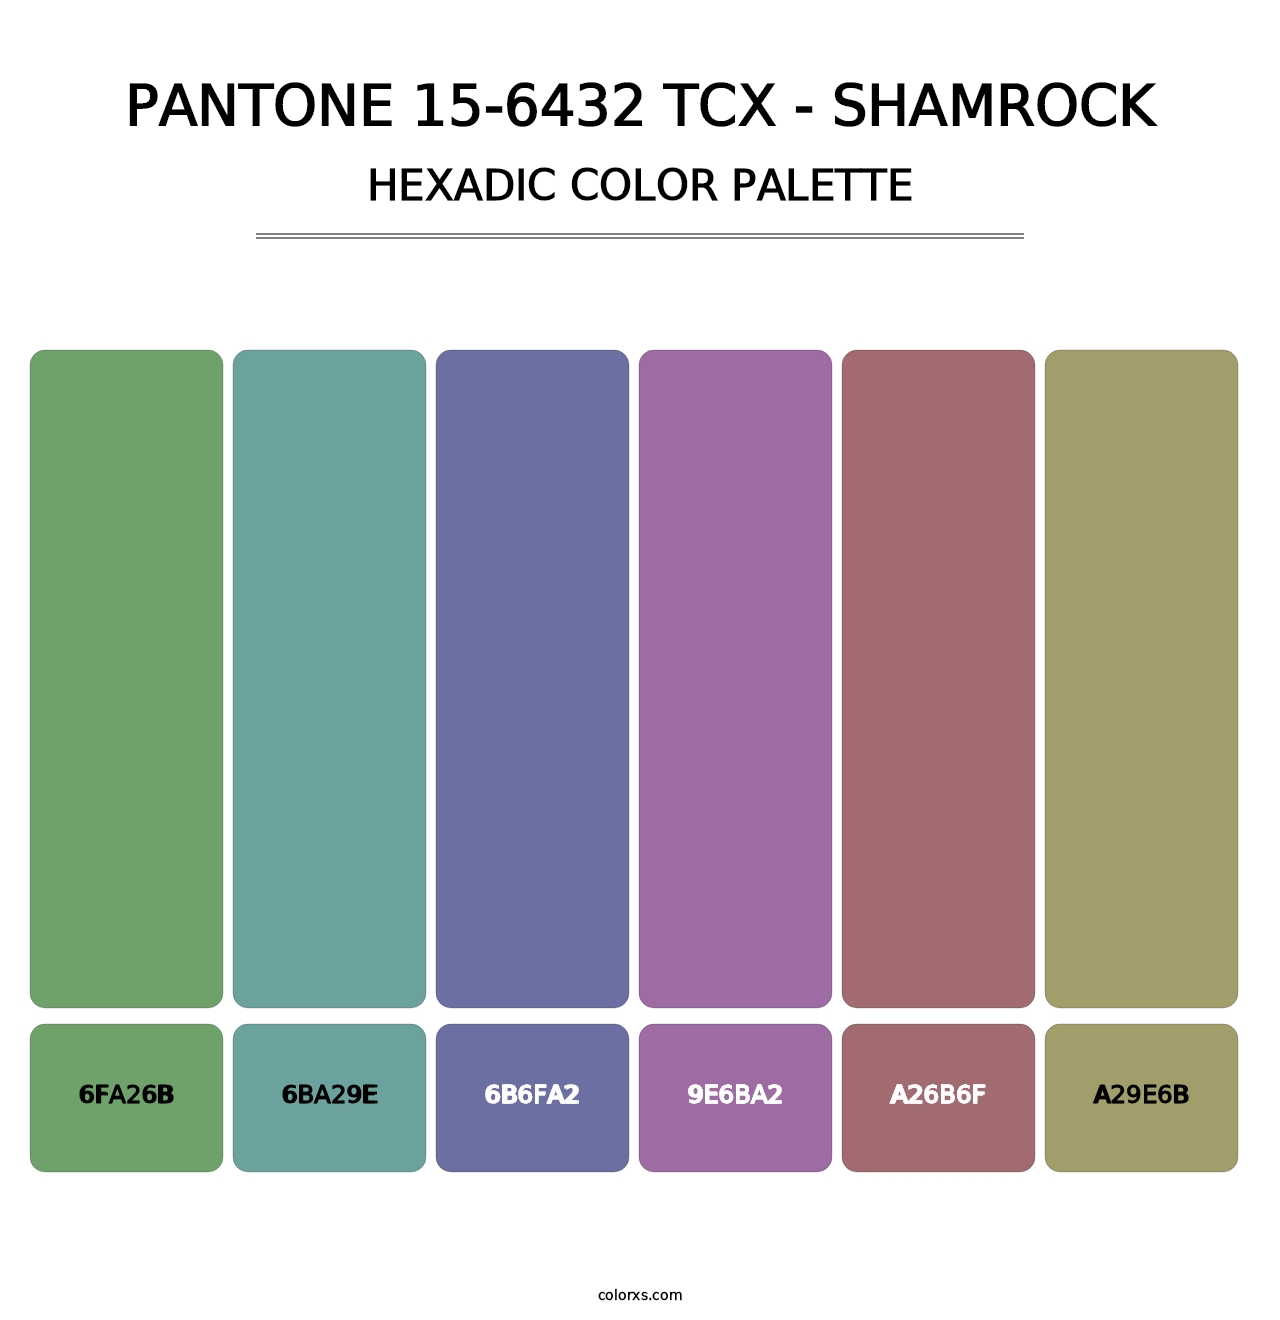 PANTONE 15-6432 TCX - Shamrock - Hexadic Color Palette